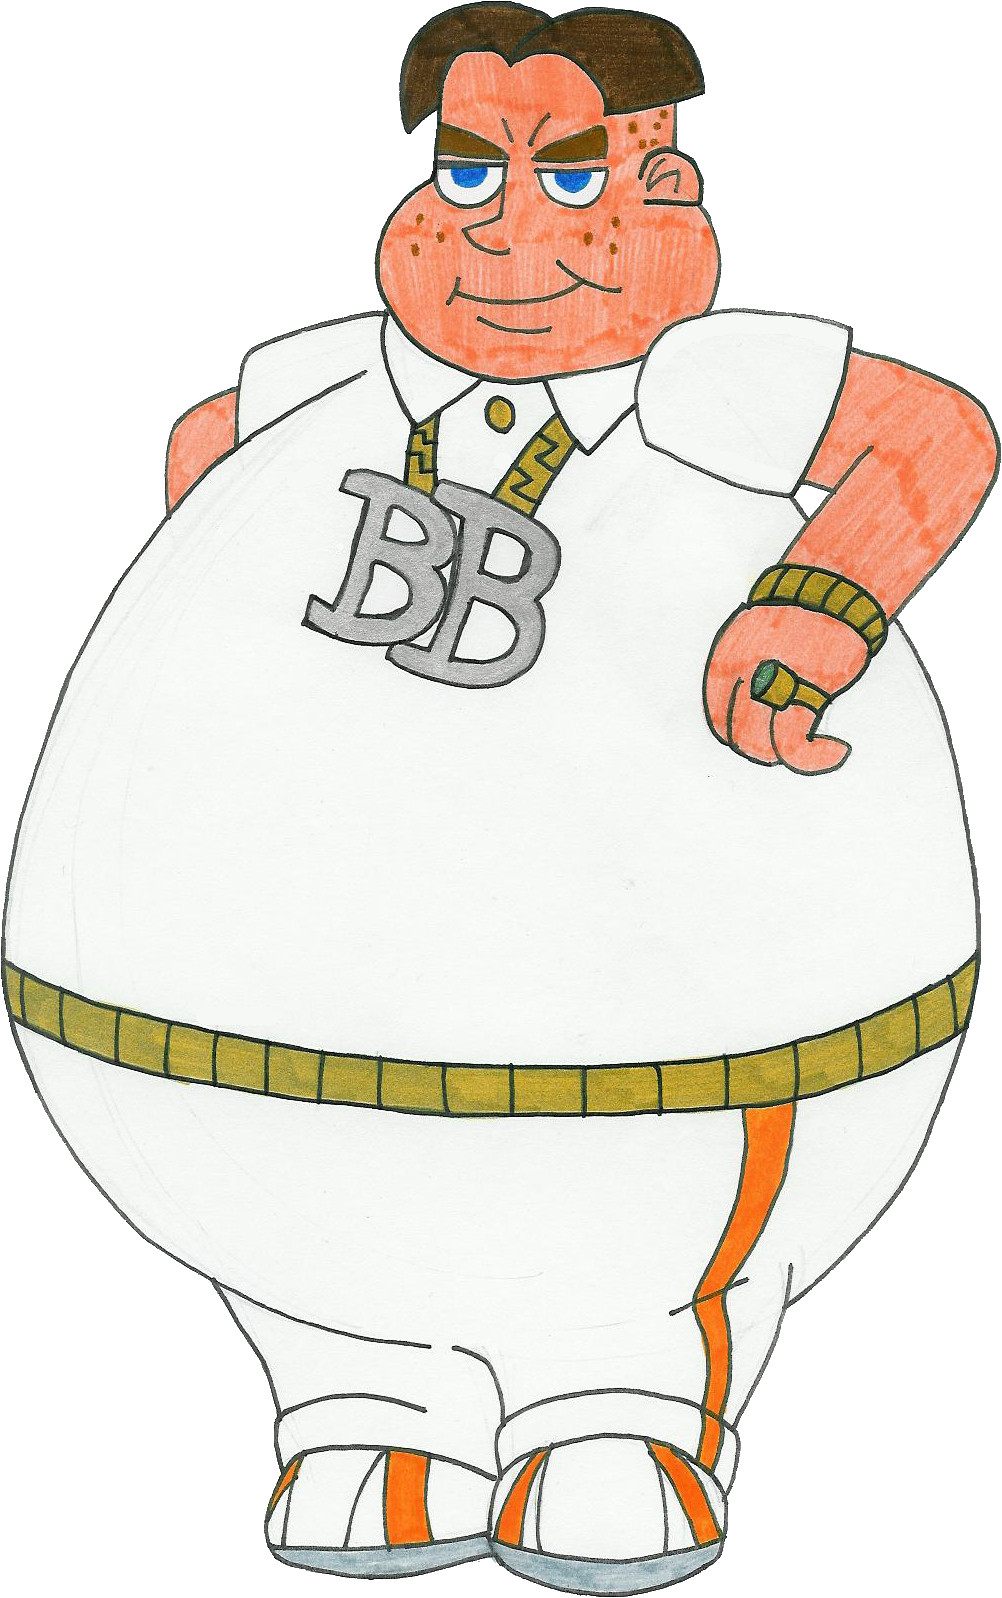 Bling Bling Boy is feel so chubby by MCsaurus on DeviantArt